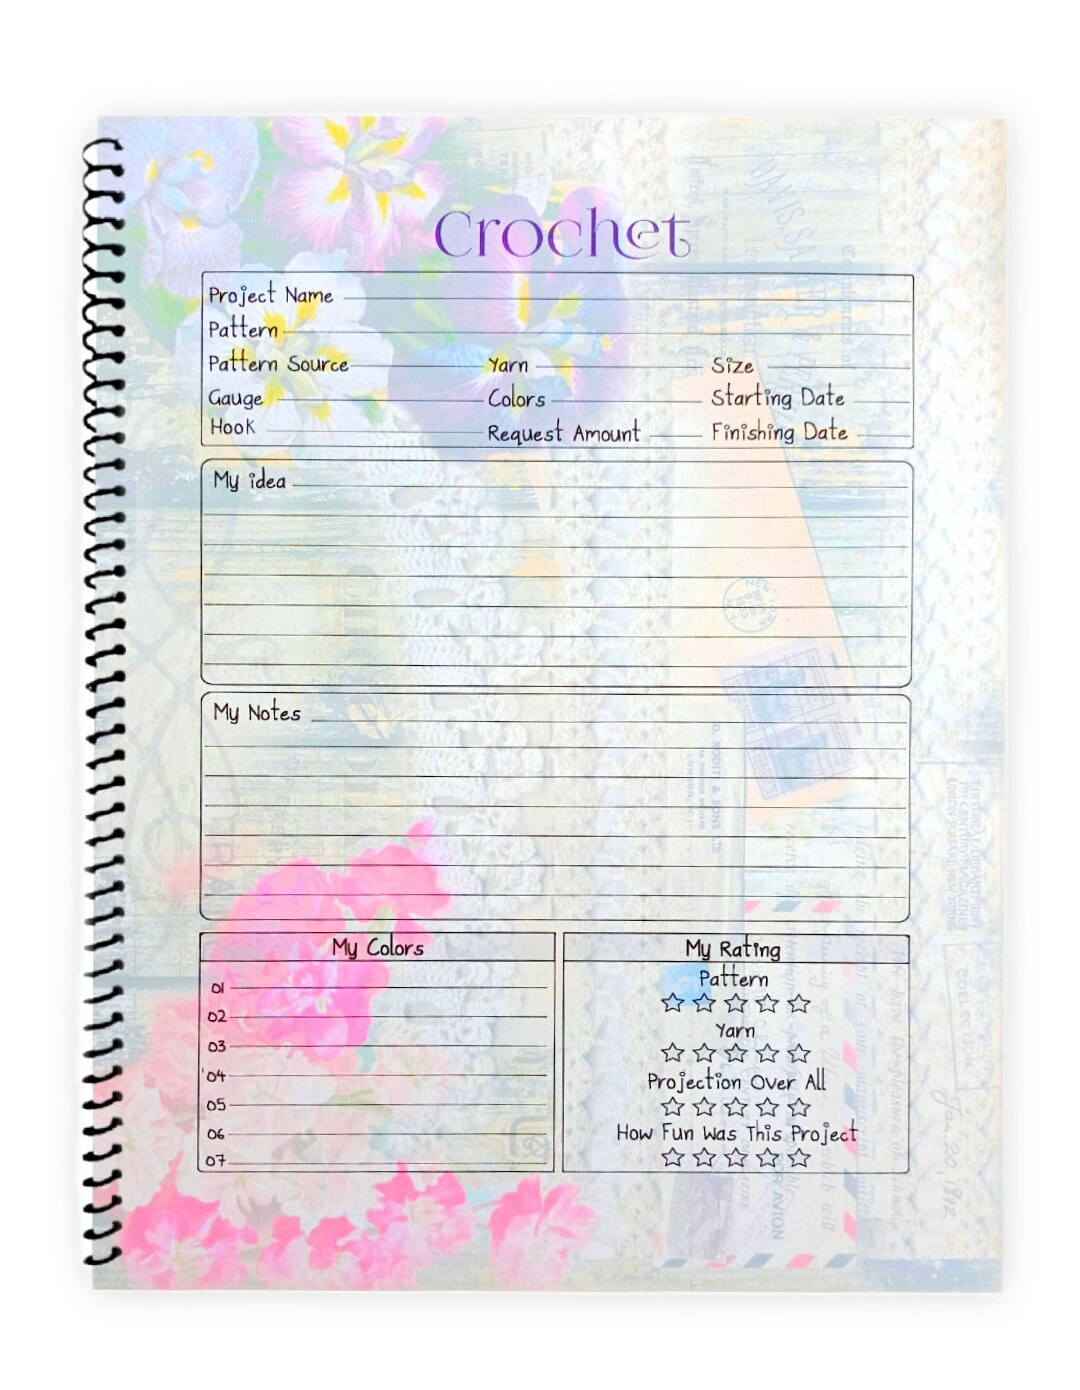 Crochet Journal